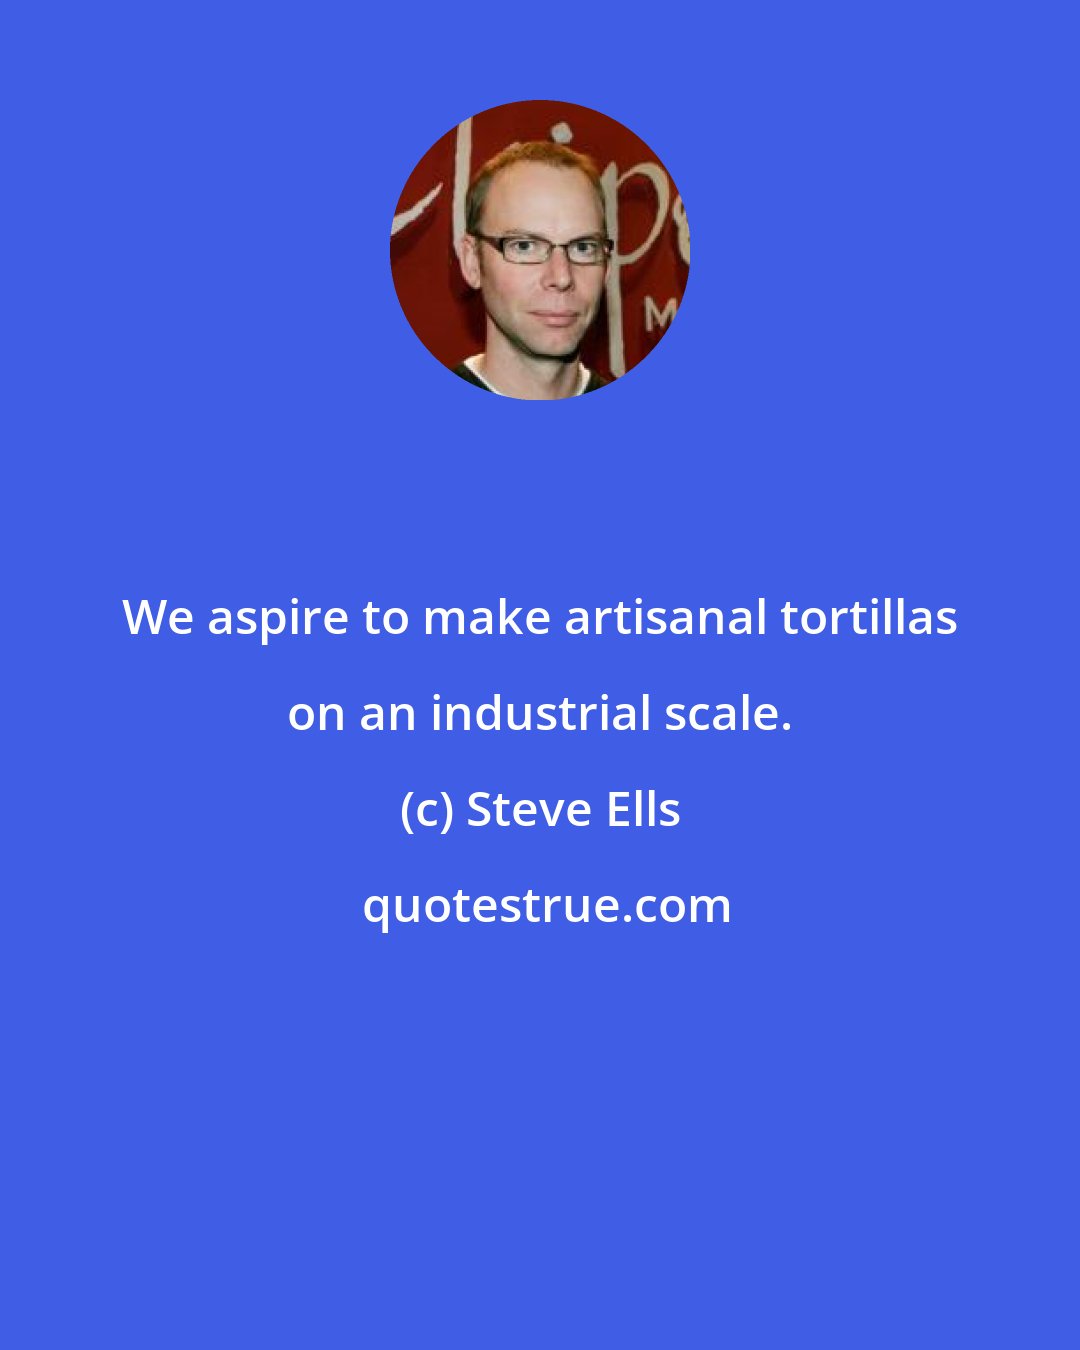 Steve Ells: We aspire to make artisanal tortillas on an industrial scale.